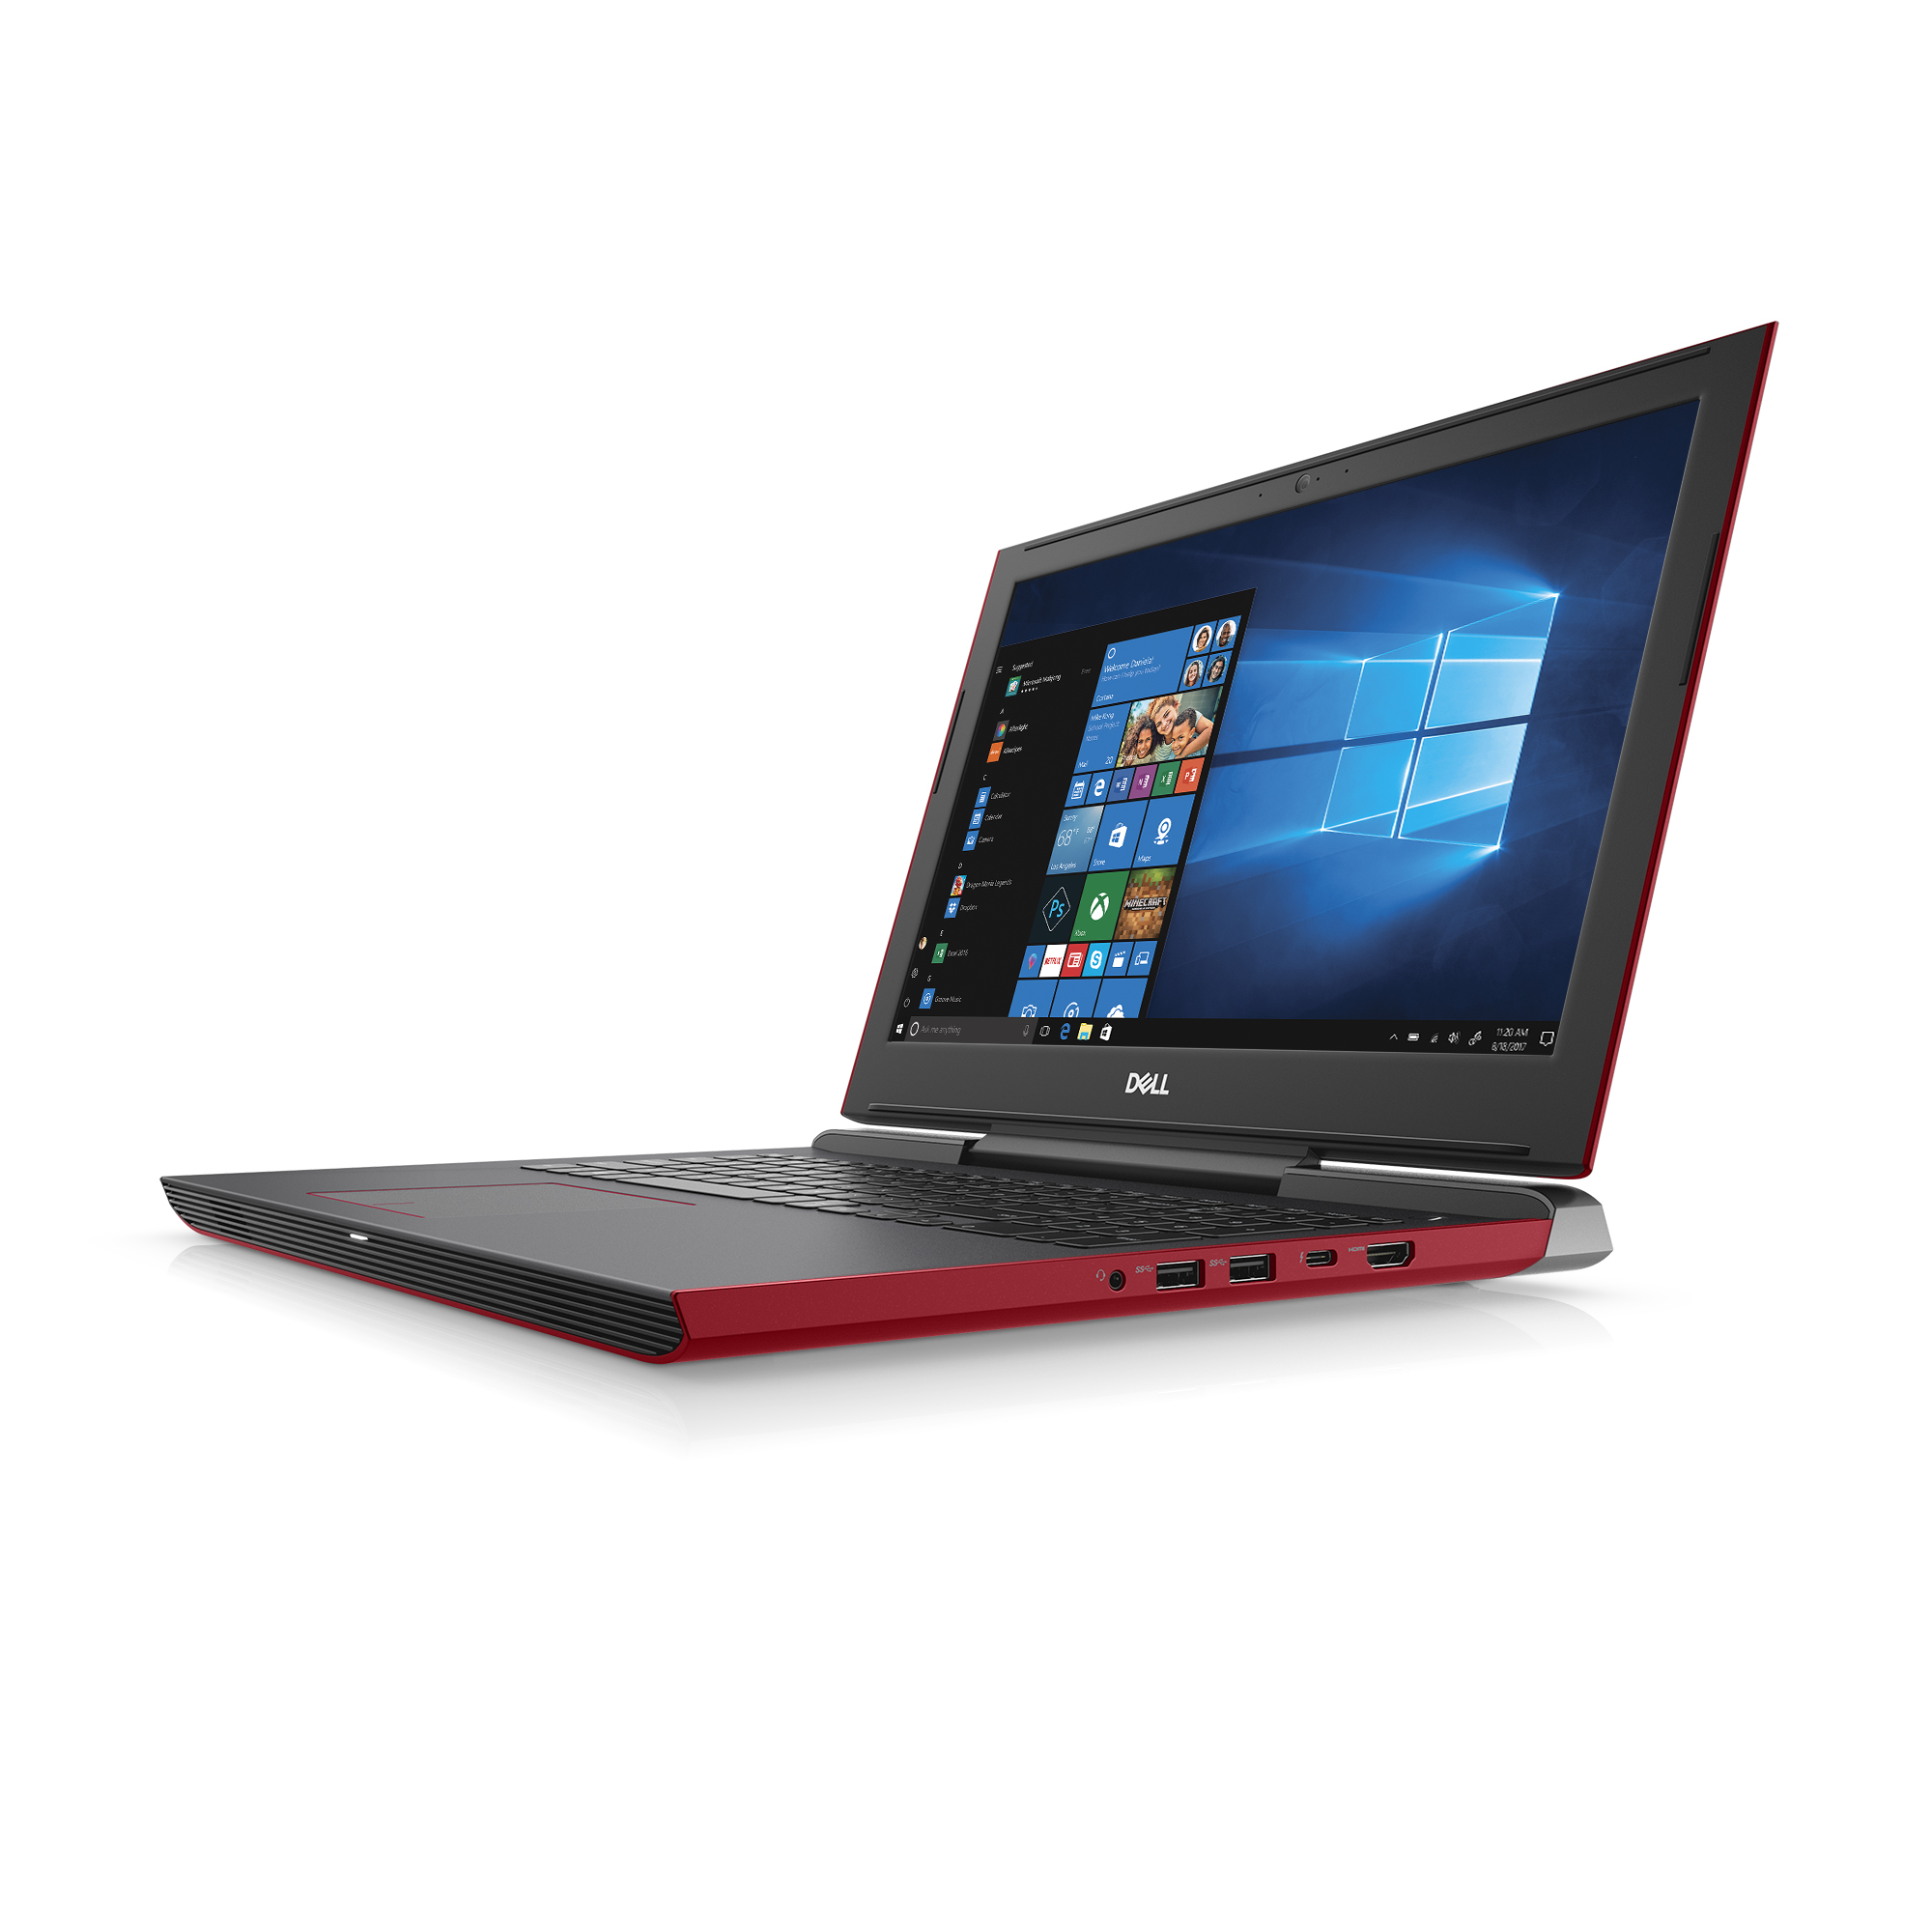 Dell G5 Gaming Laptop 15.6" Full HD, Intel Core i7-8750H, NVIDIA GeForce GTX 1050 Ti 4GB, 1TB HDD + 128GB SSD Storage, 8GB RAM, G5587-7037RED-PUS - image 3 of 6